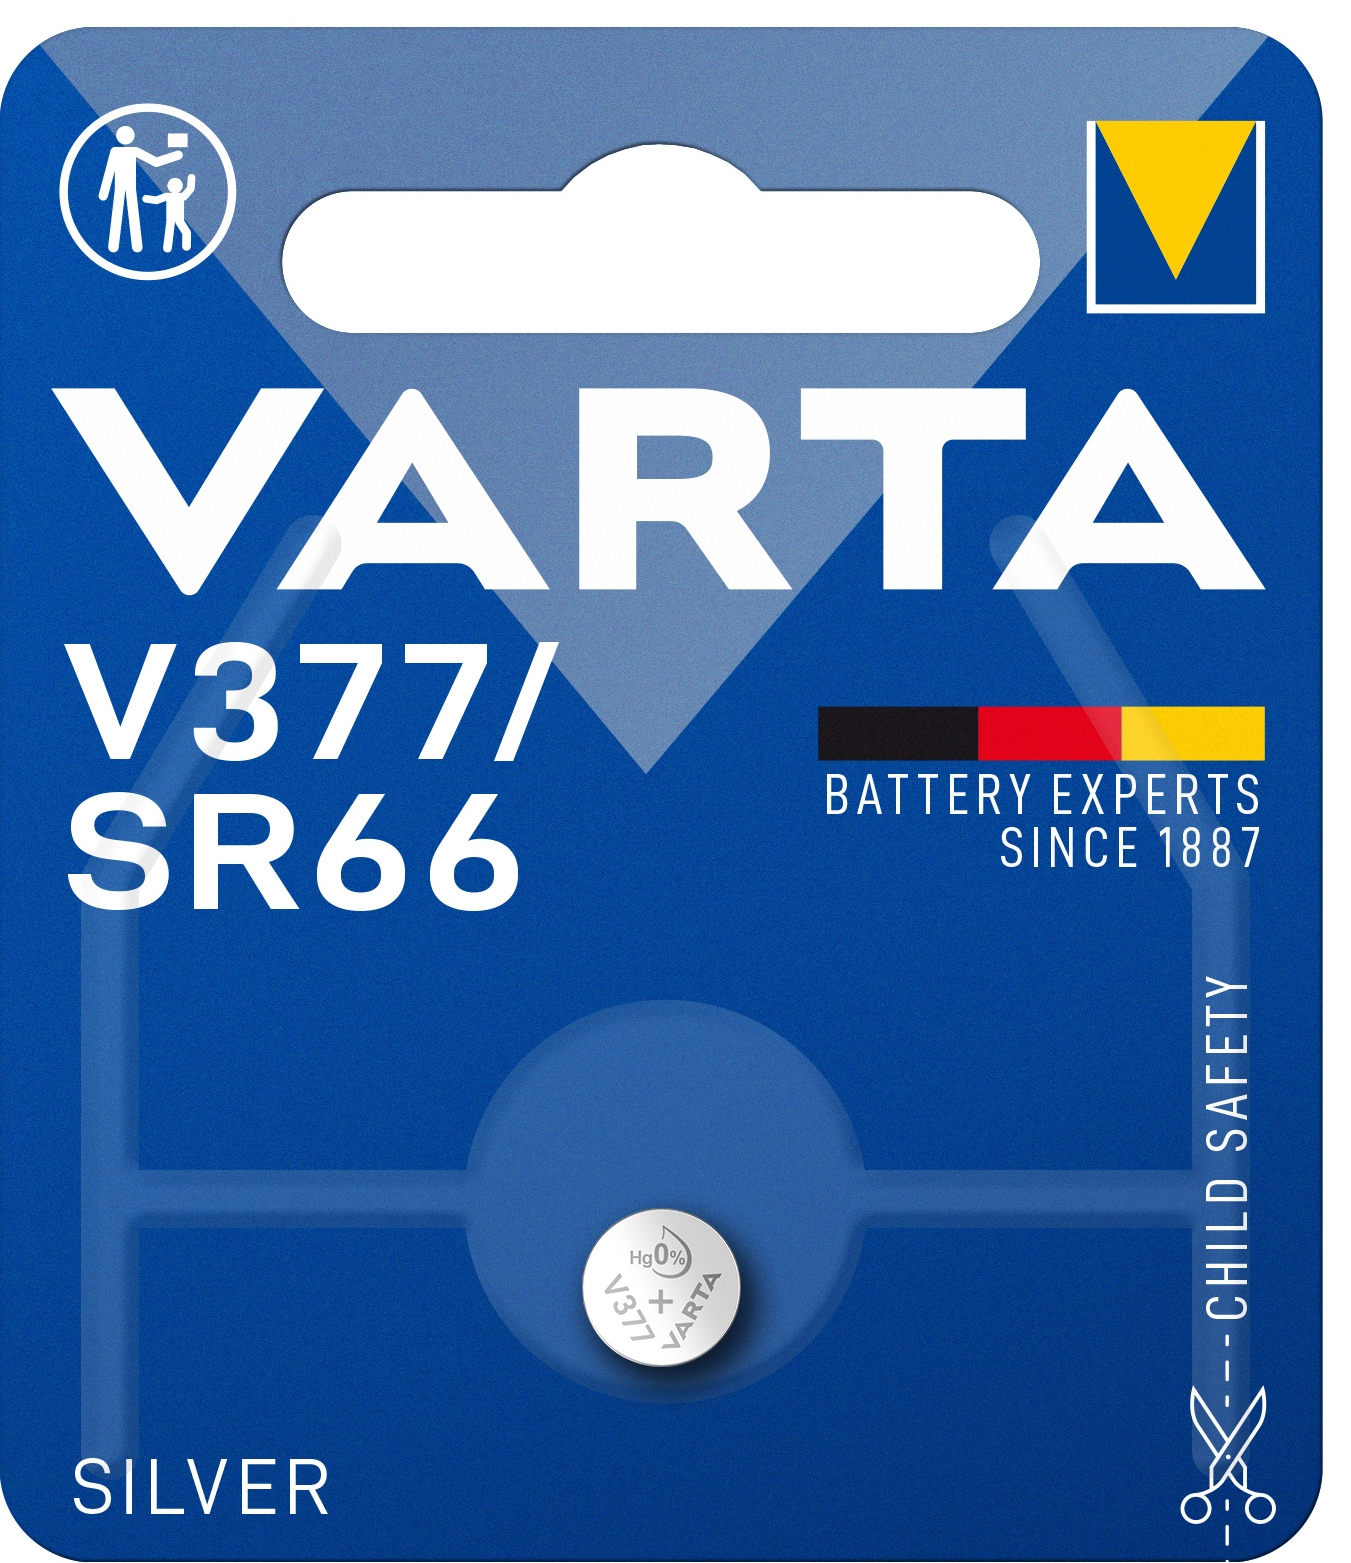 Varta V 377 batteri (1 pk.) - Elkjøp